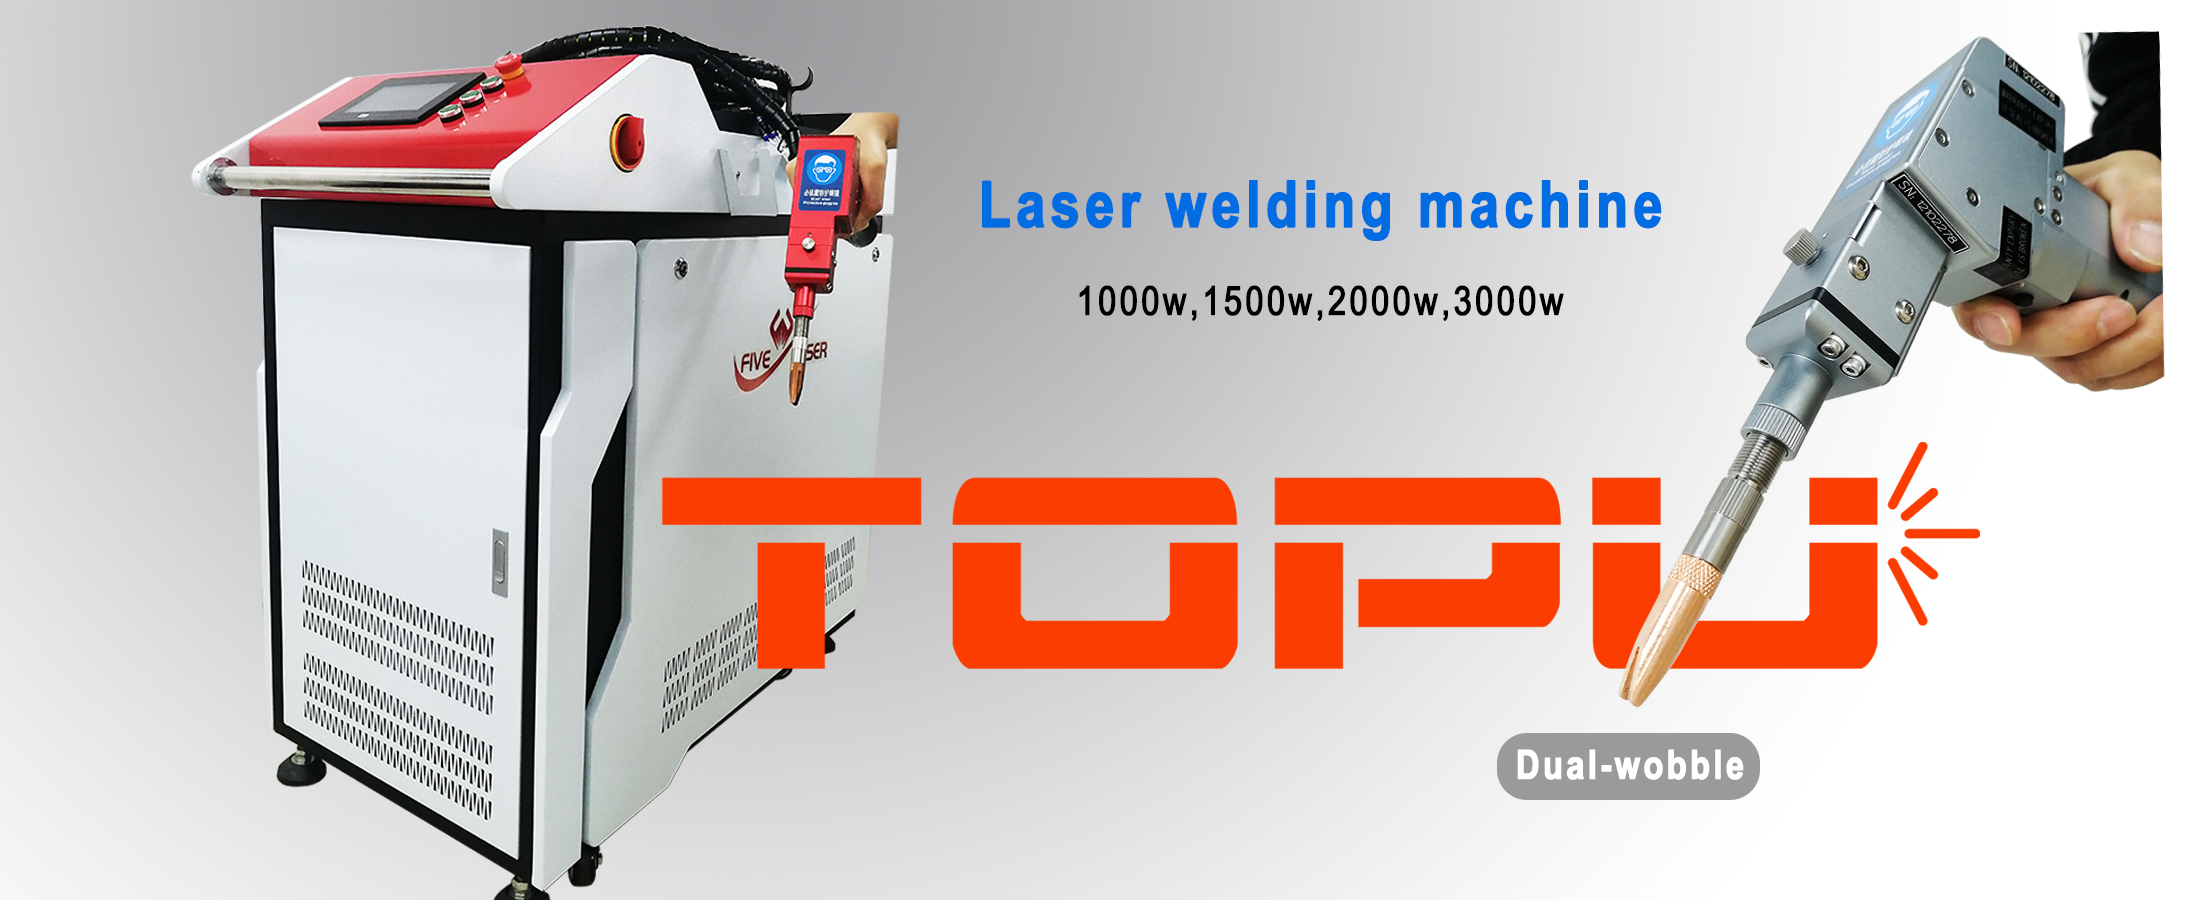 Dual-wobble laser welding machine